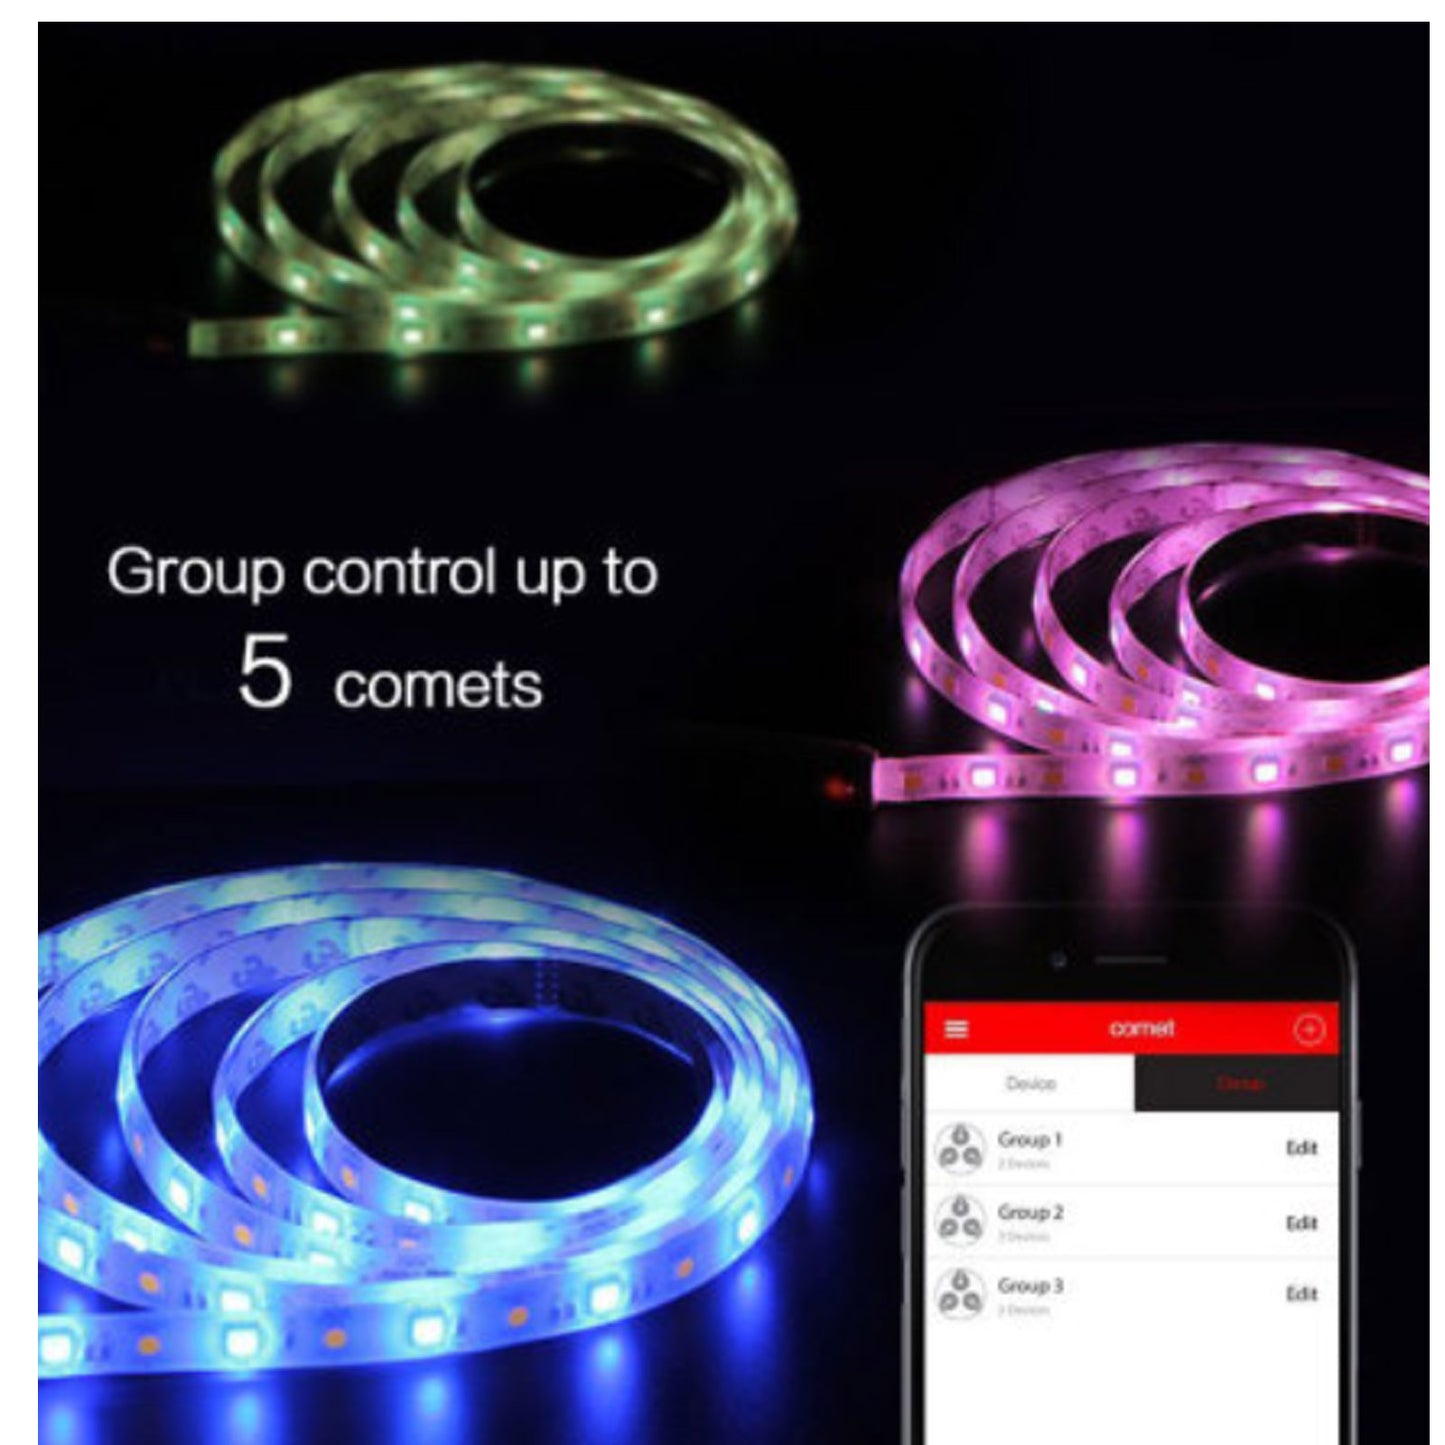 Playbulb Comet Smart Bluetooth LED Colour Light Strip Kit 2M